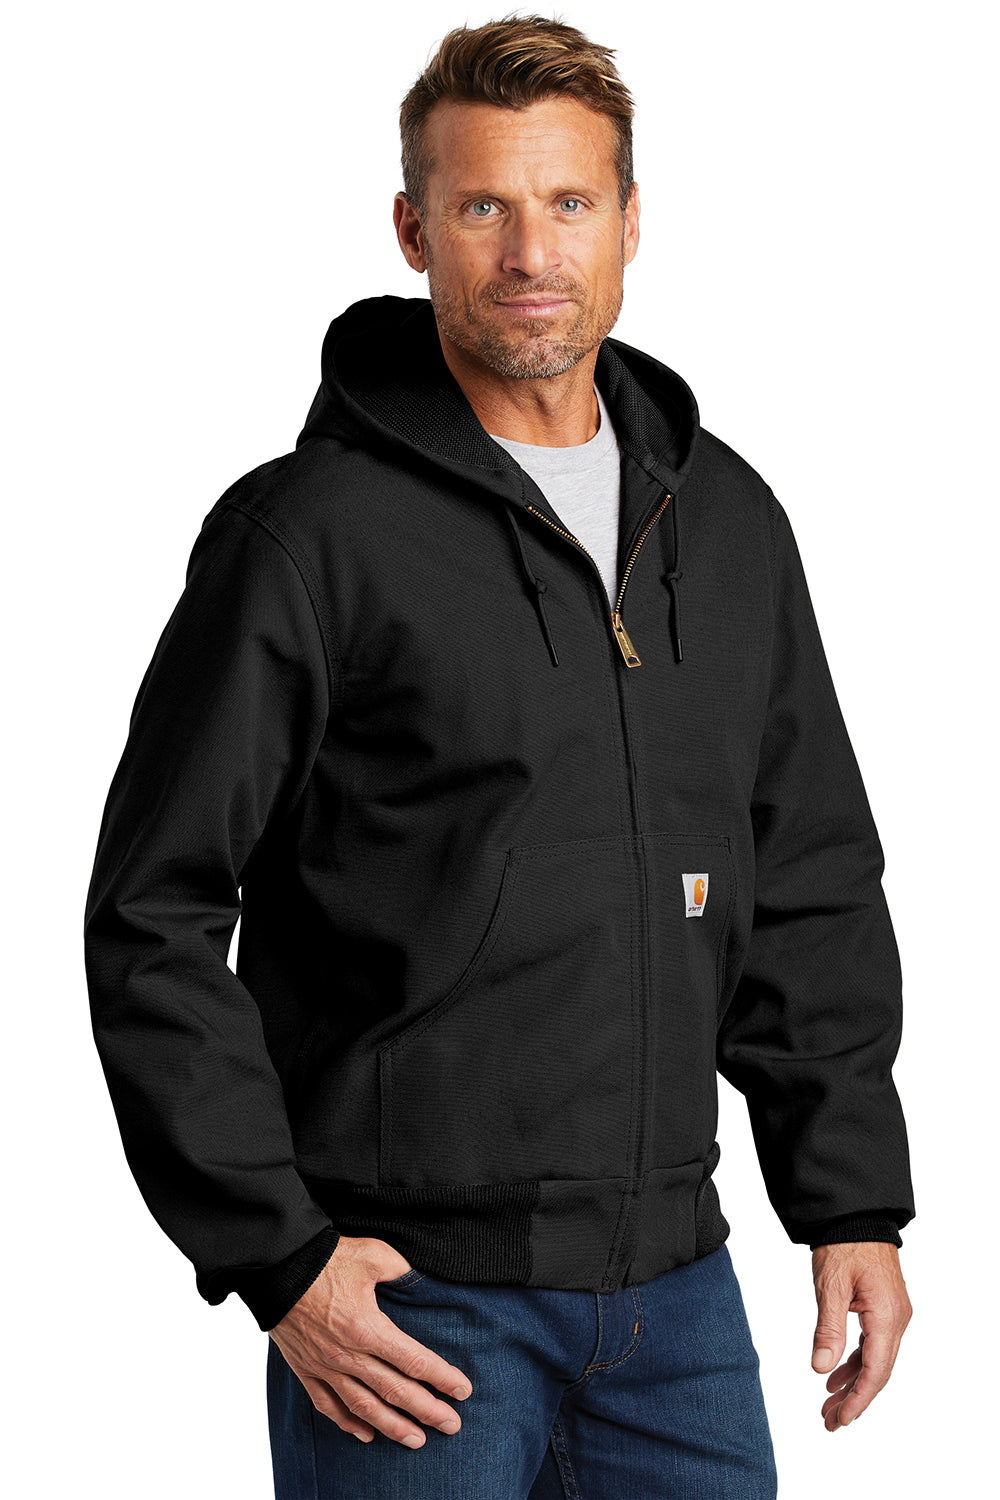 Carhartt CTJ131/CTTJ131 Mens Wind & Water Resistant Duck Cloth Full Zip Hooded Work Jacket Black Model 3Q